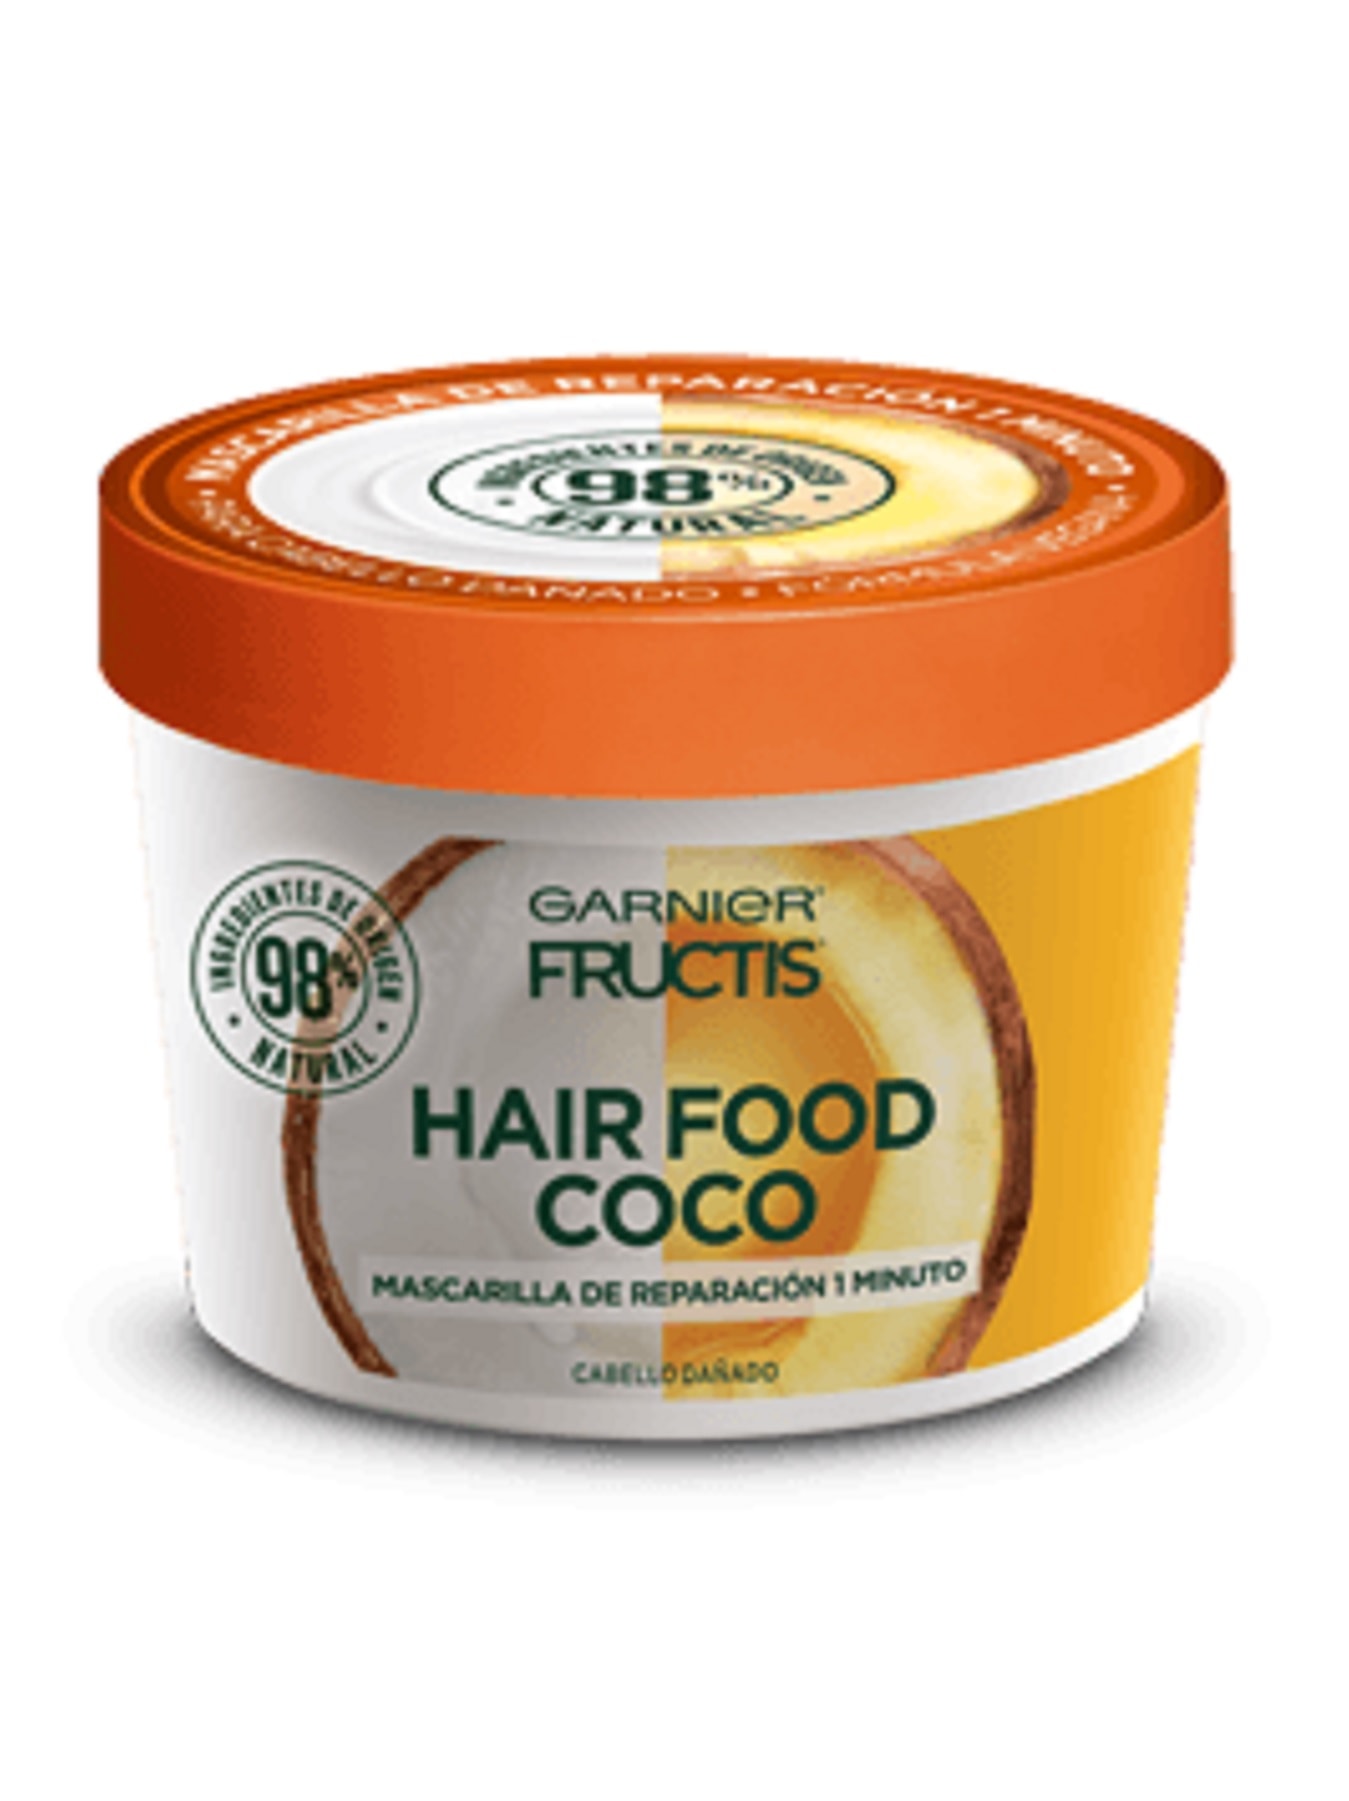 Hair food coco